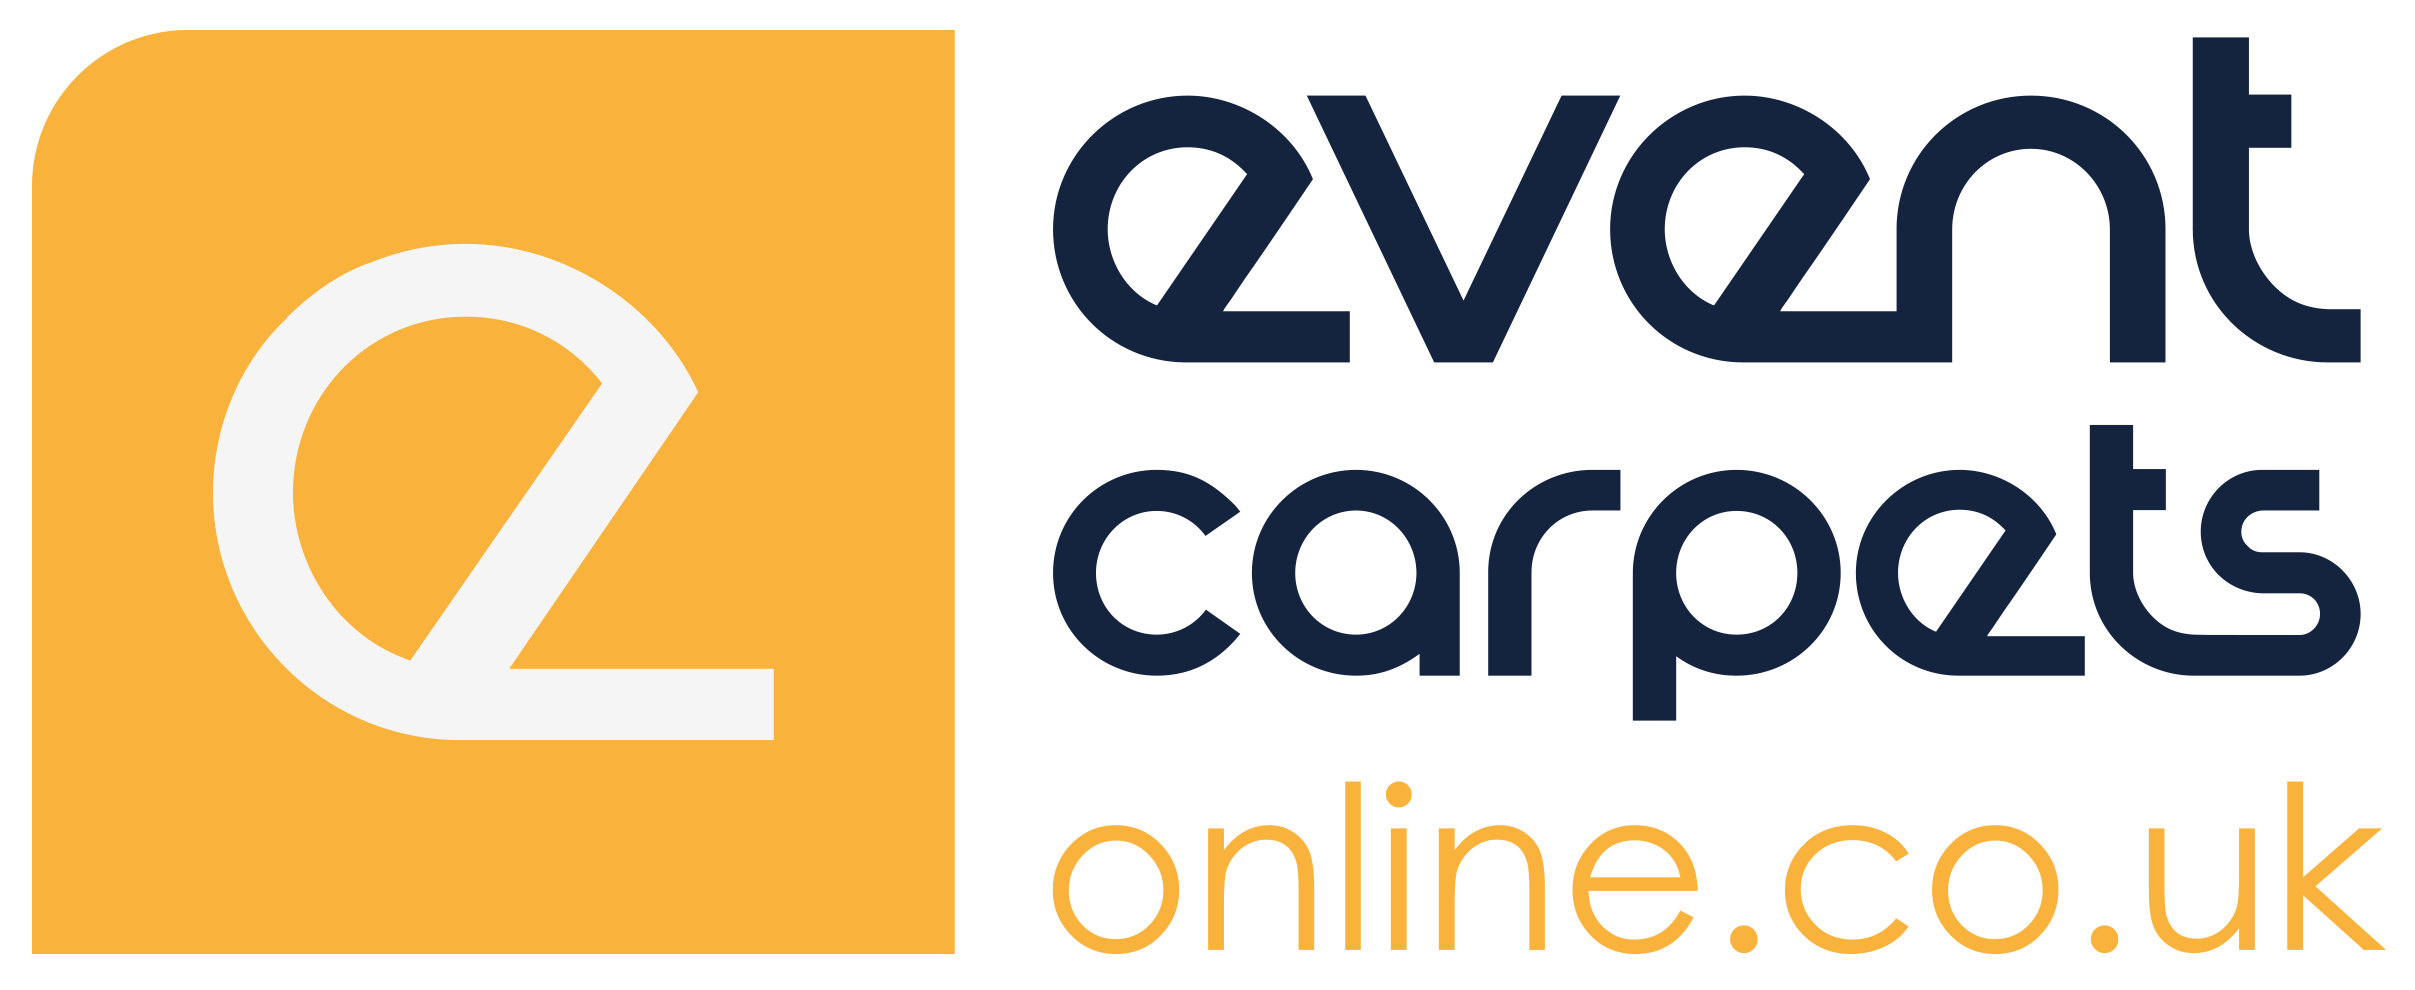 eventcarpetsonline.co.uk